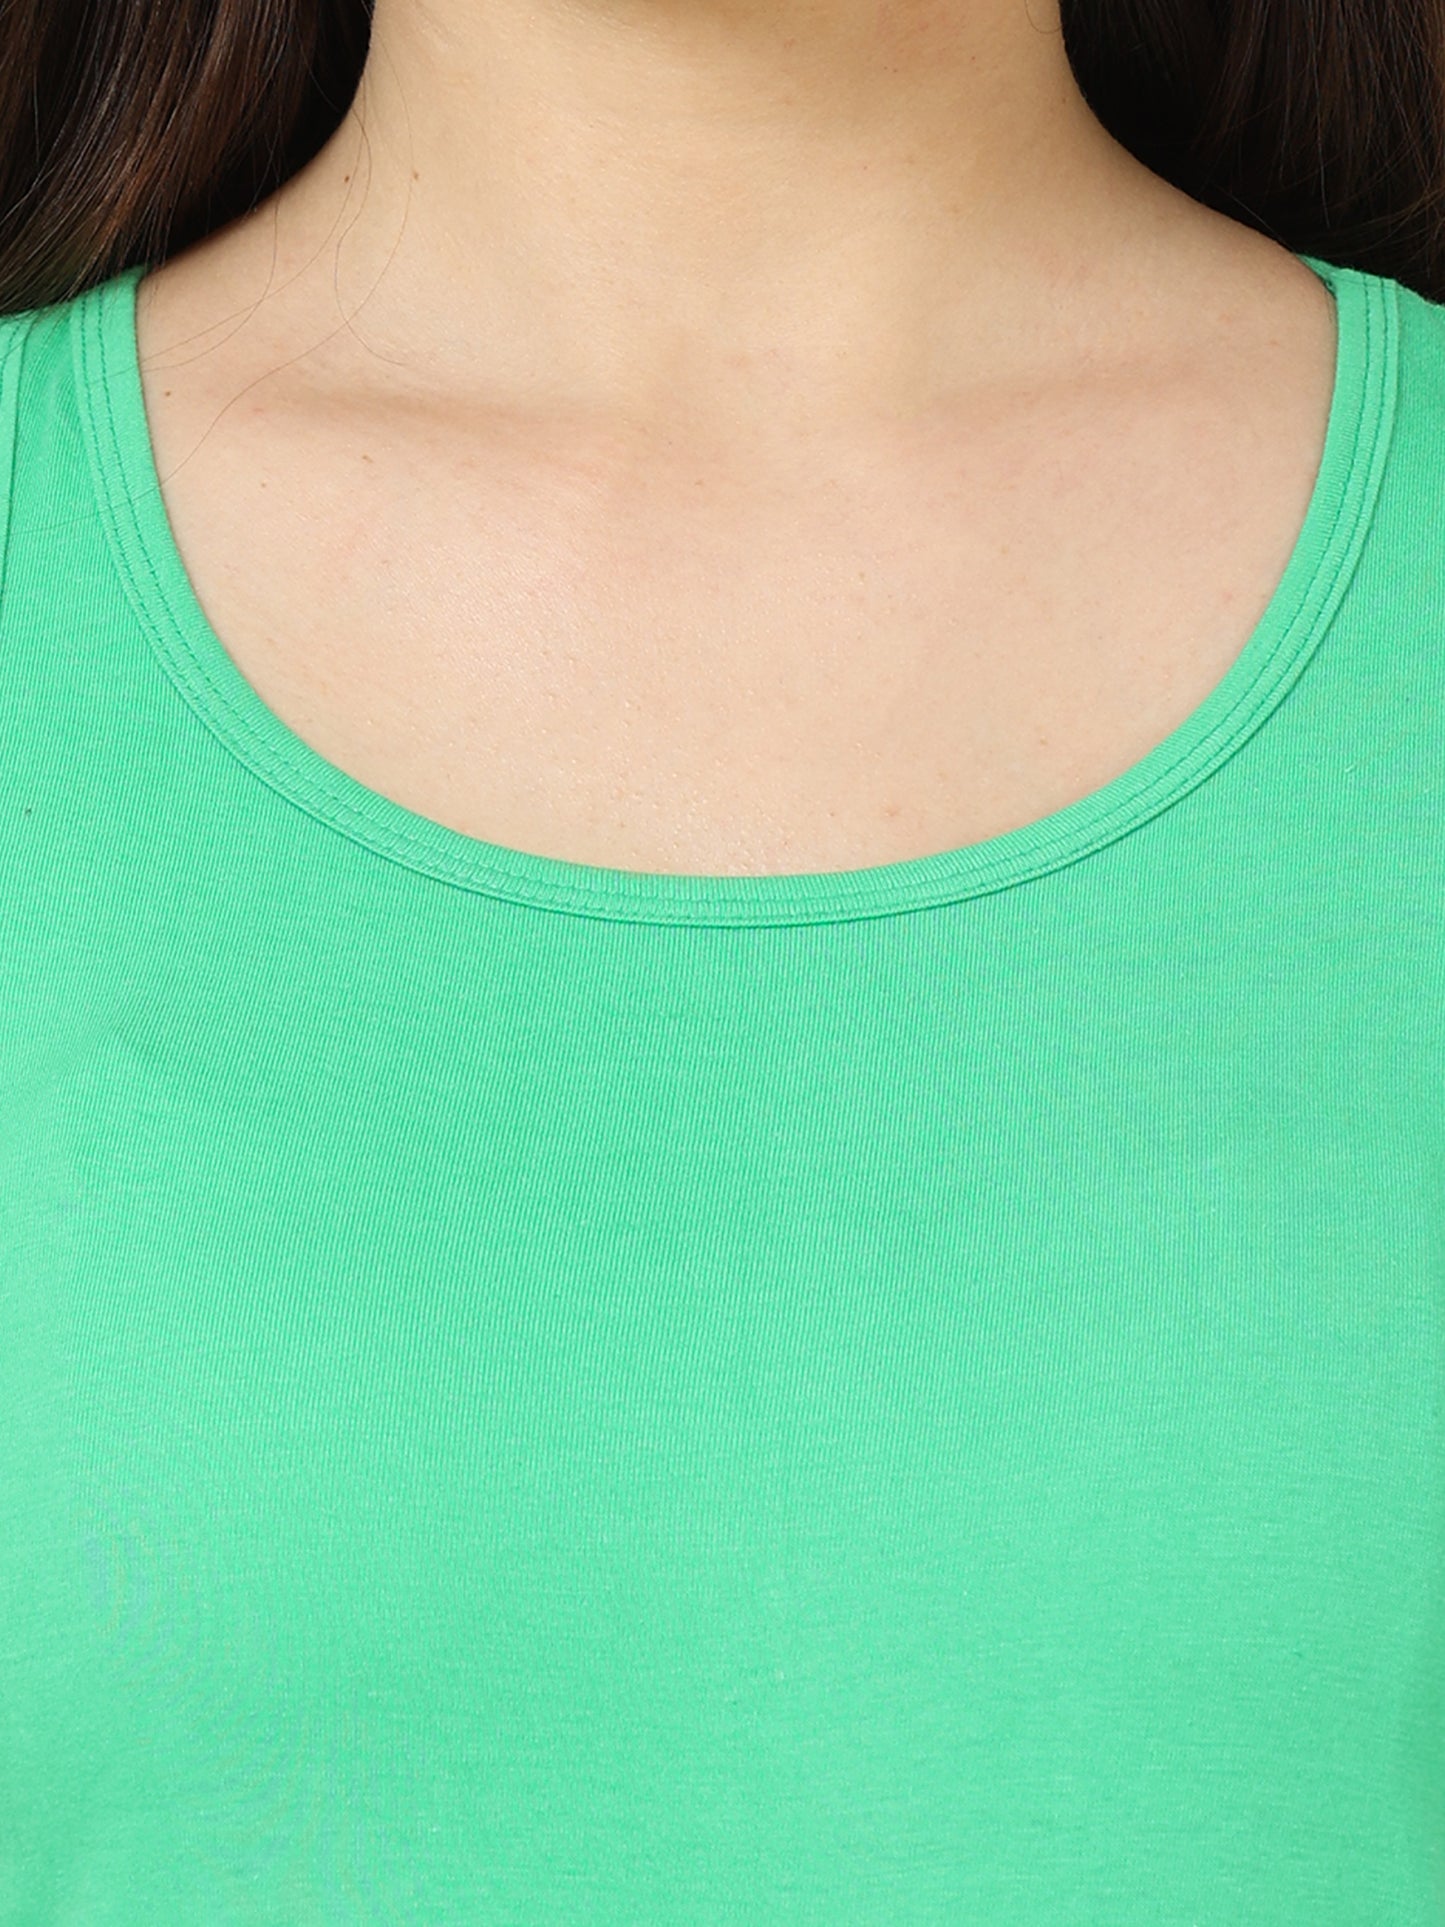 Women's Cotton Plain Sleeveless Pista Green Color Top